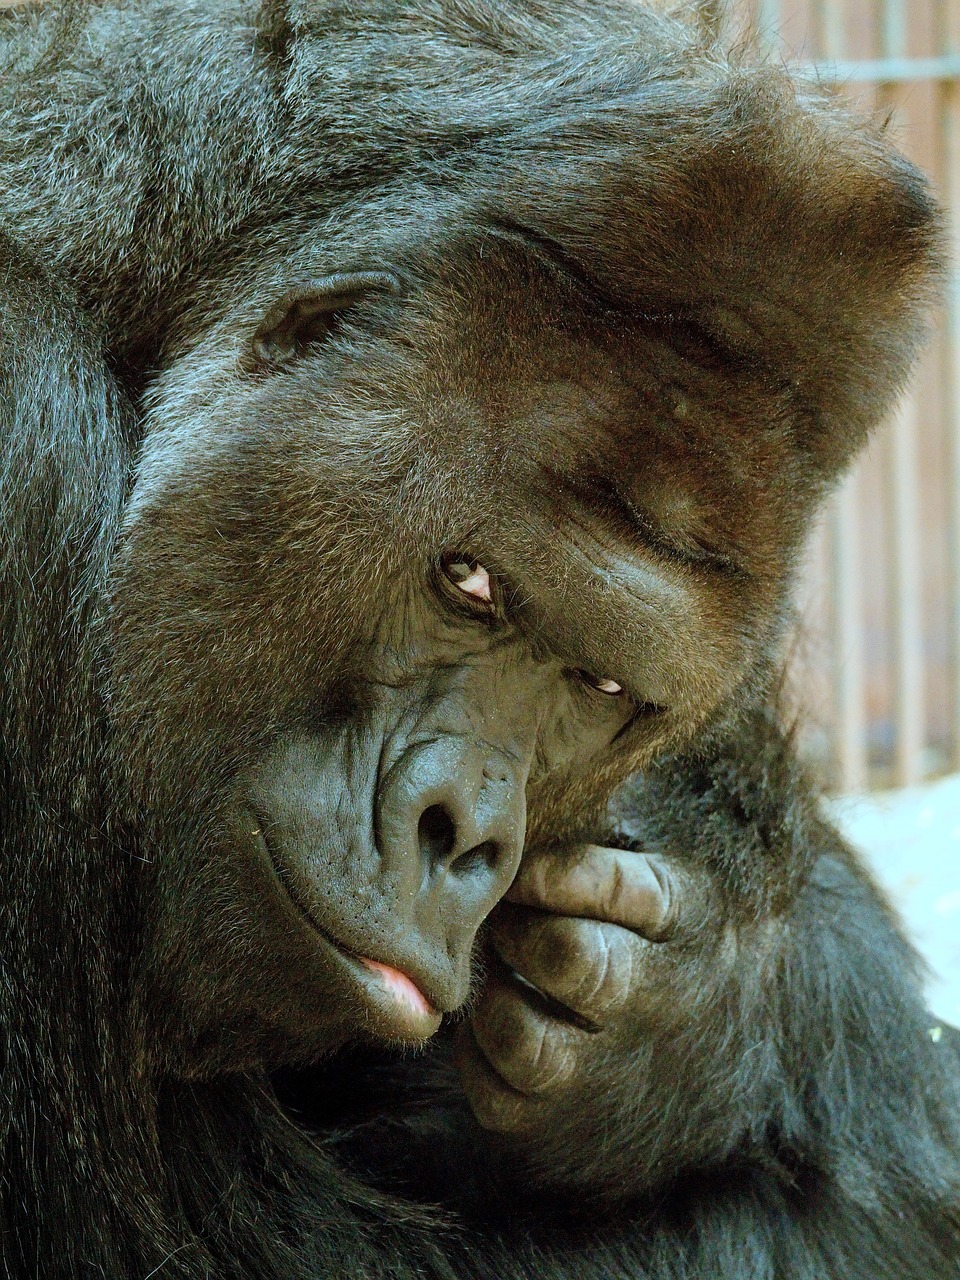 richard  gorilla  animal free photo